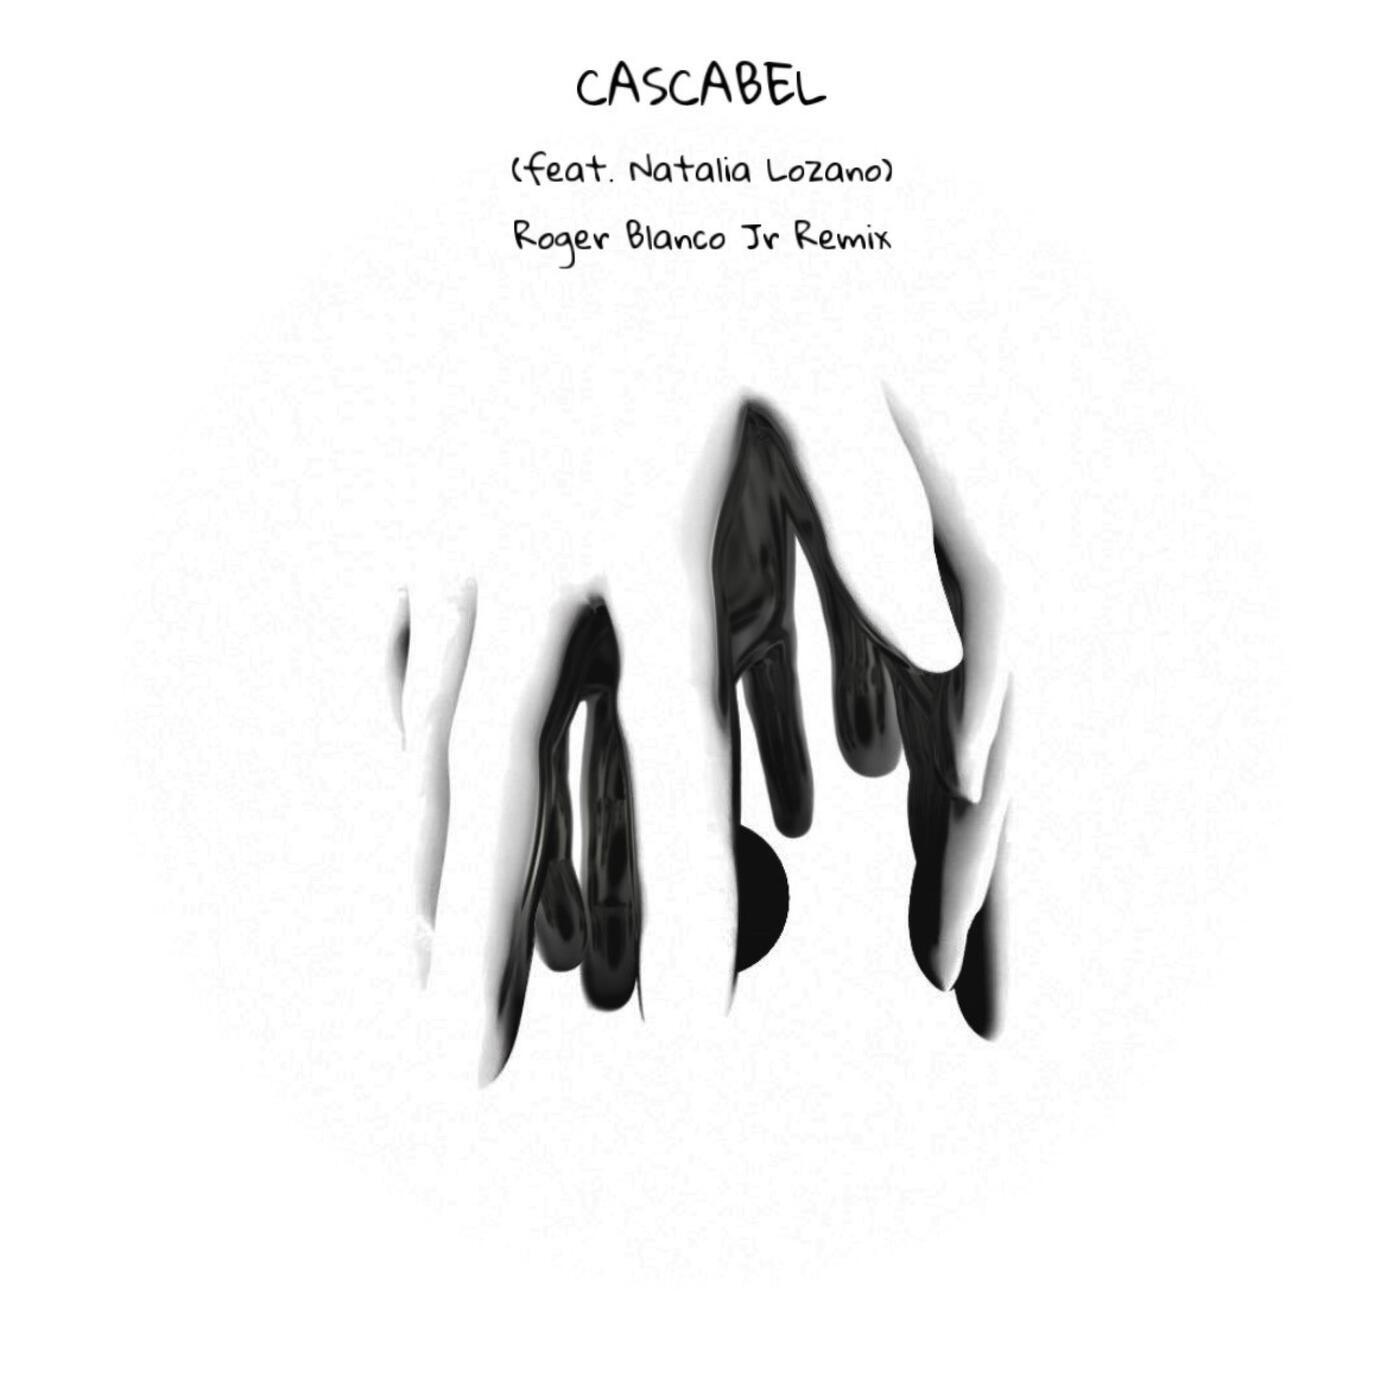 Cascabel (feat. Natalia Lozano) [Roger Blanco Jr. Remix]